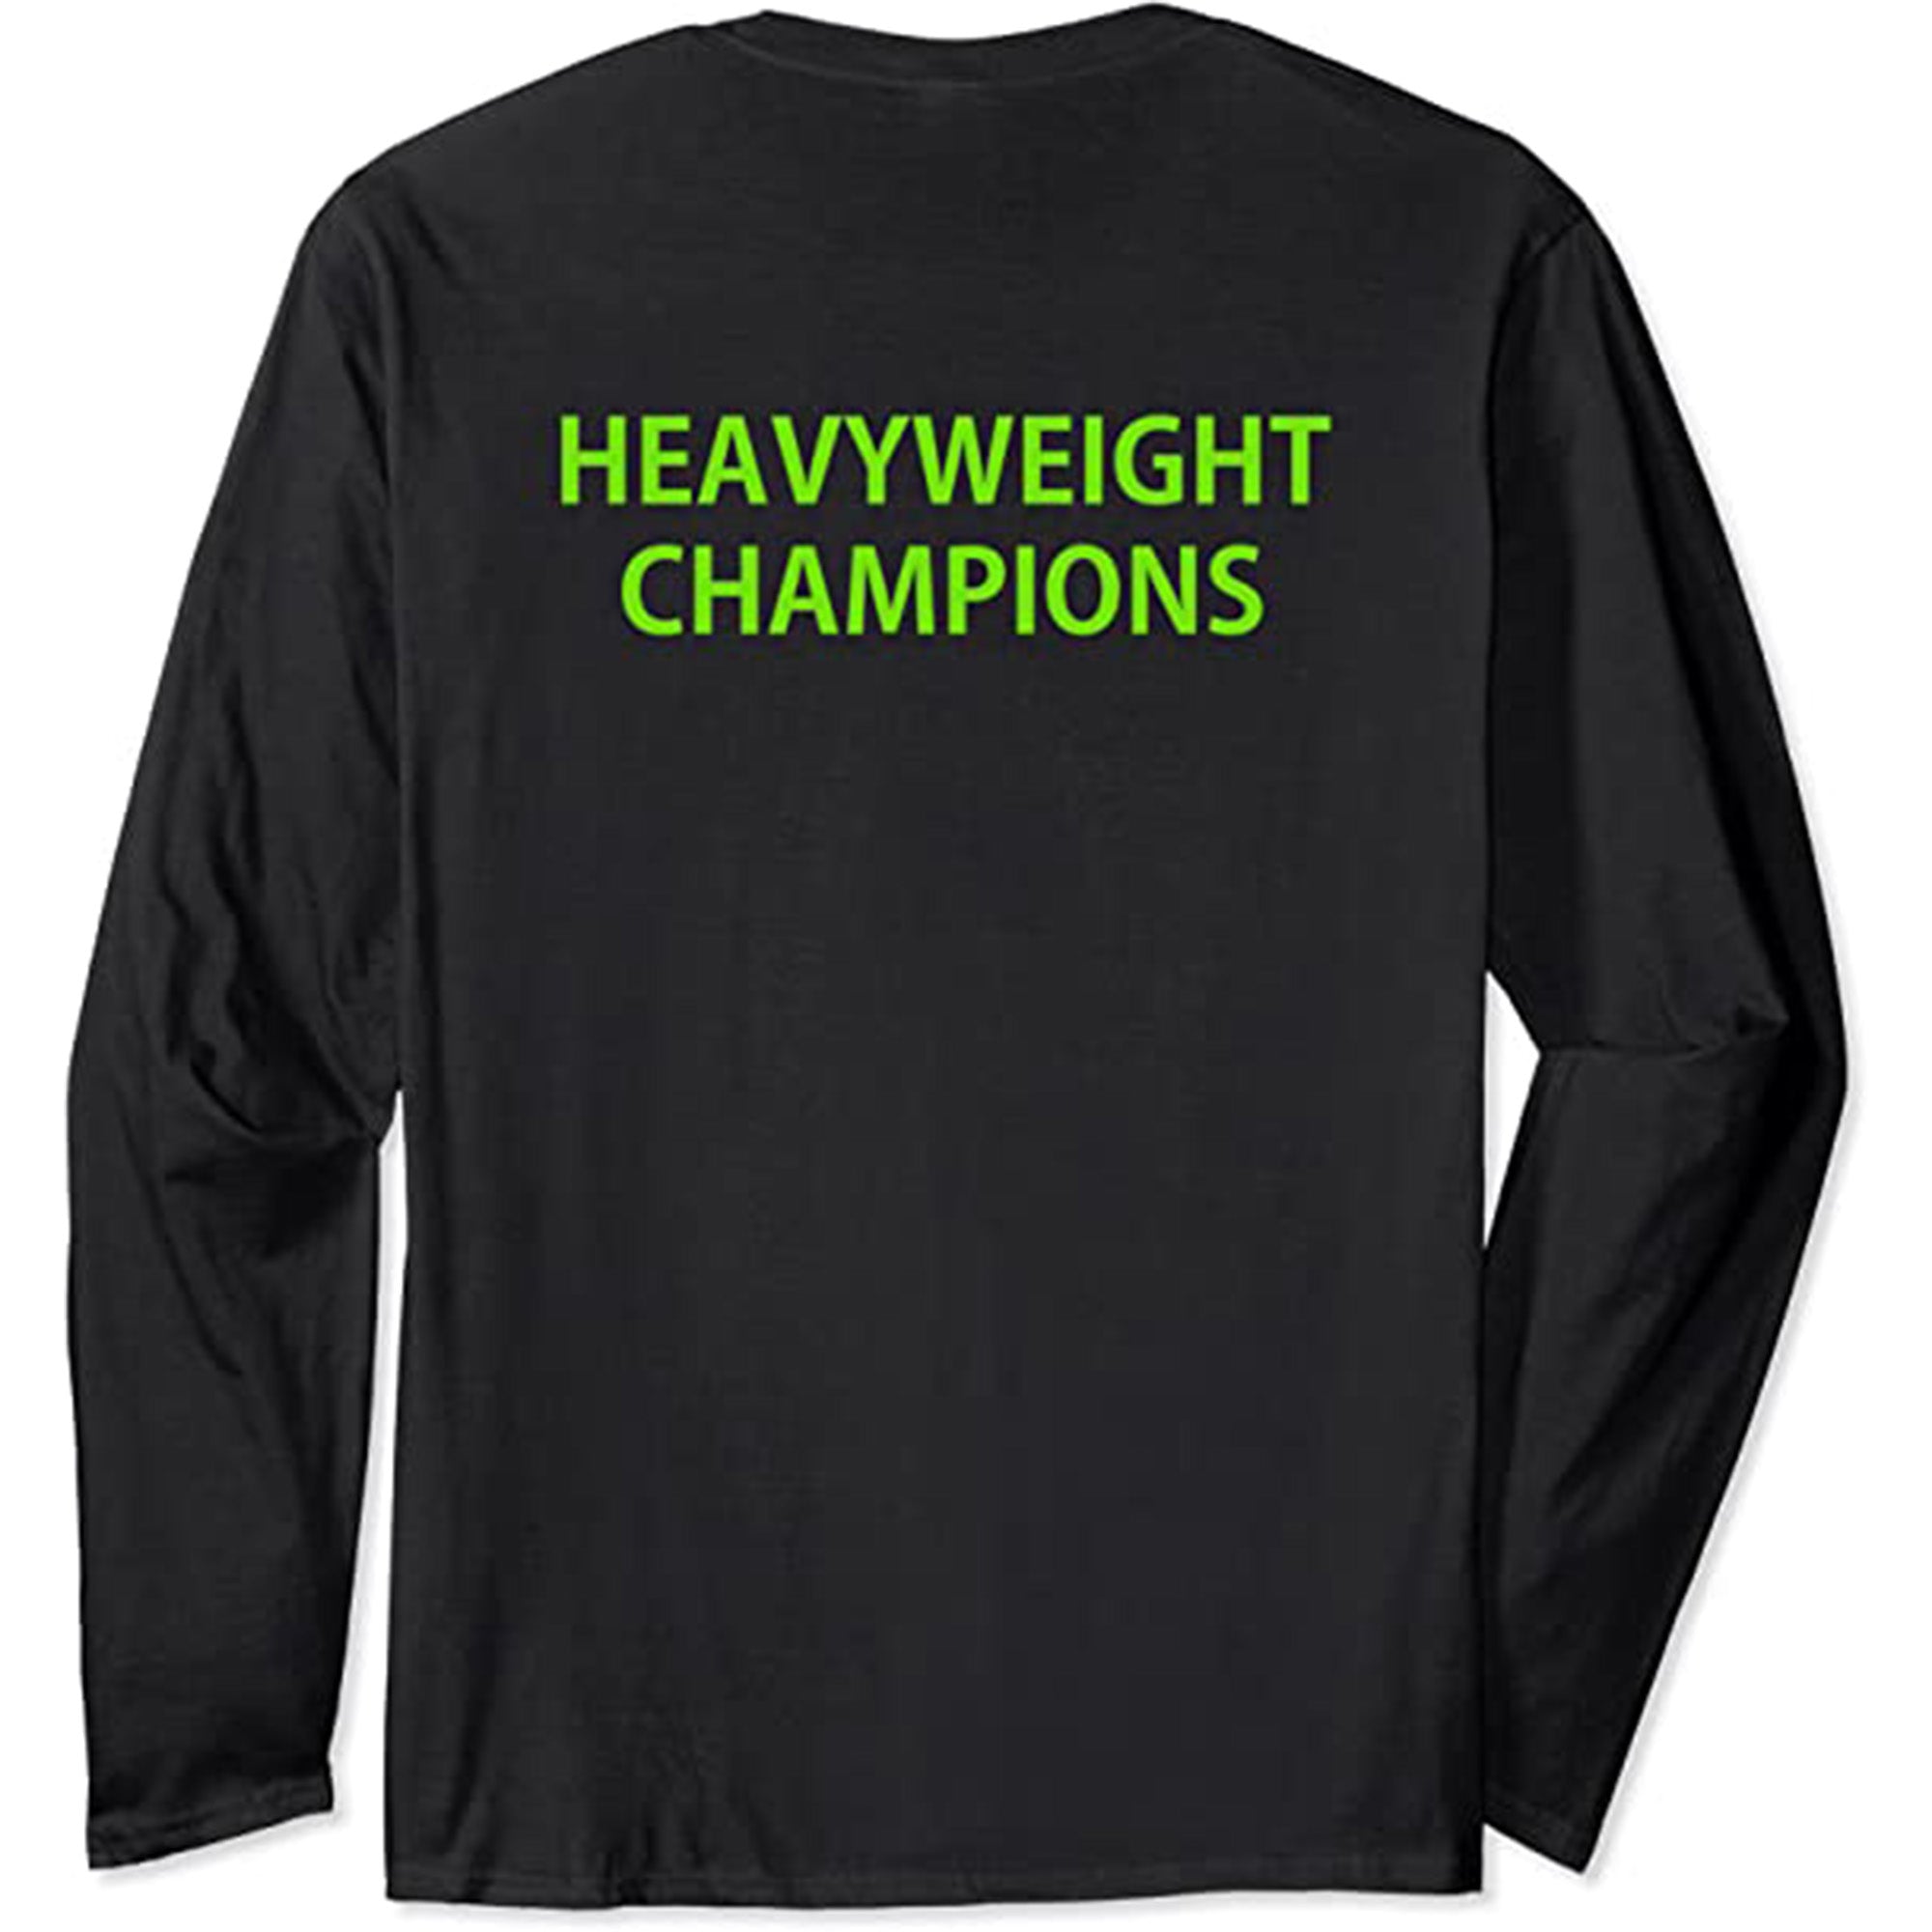 Catfish Sumo Long-Sleeve Tshirt - Heavyweight Champions™ Front & Back